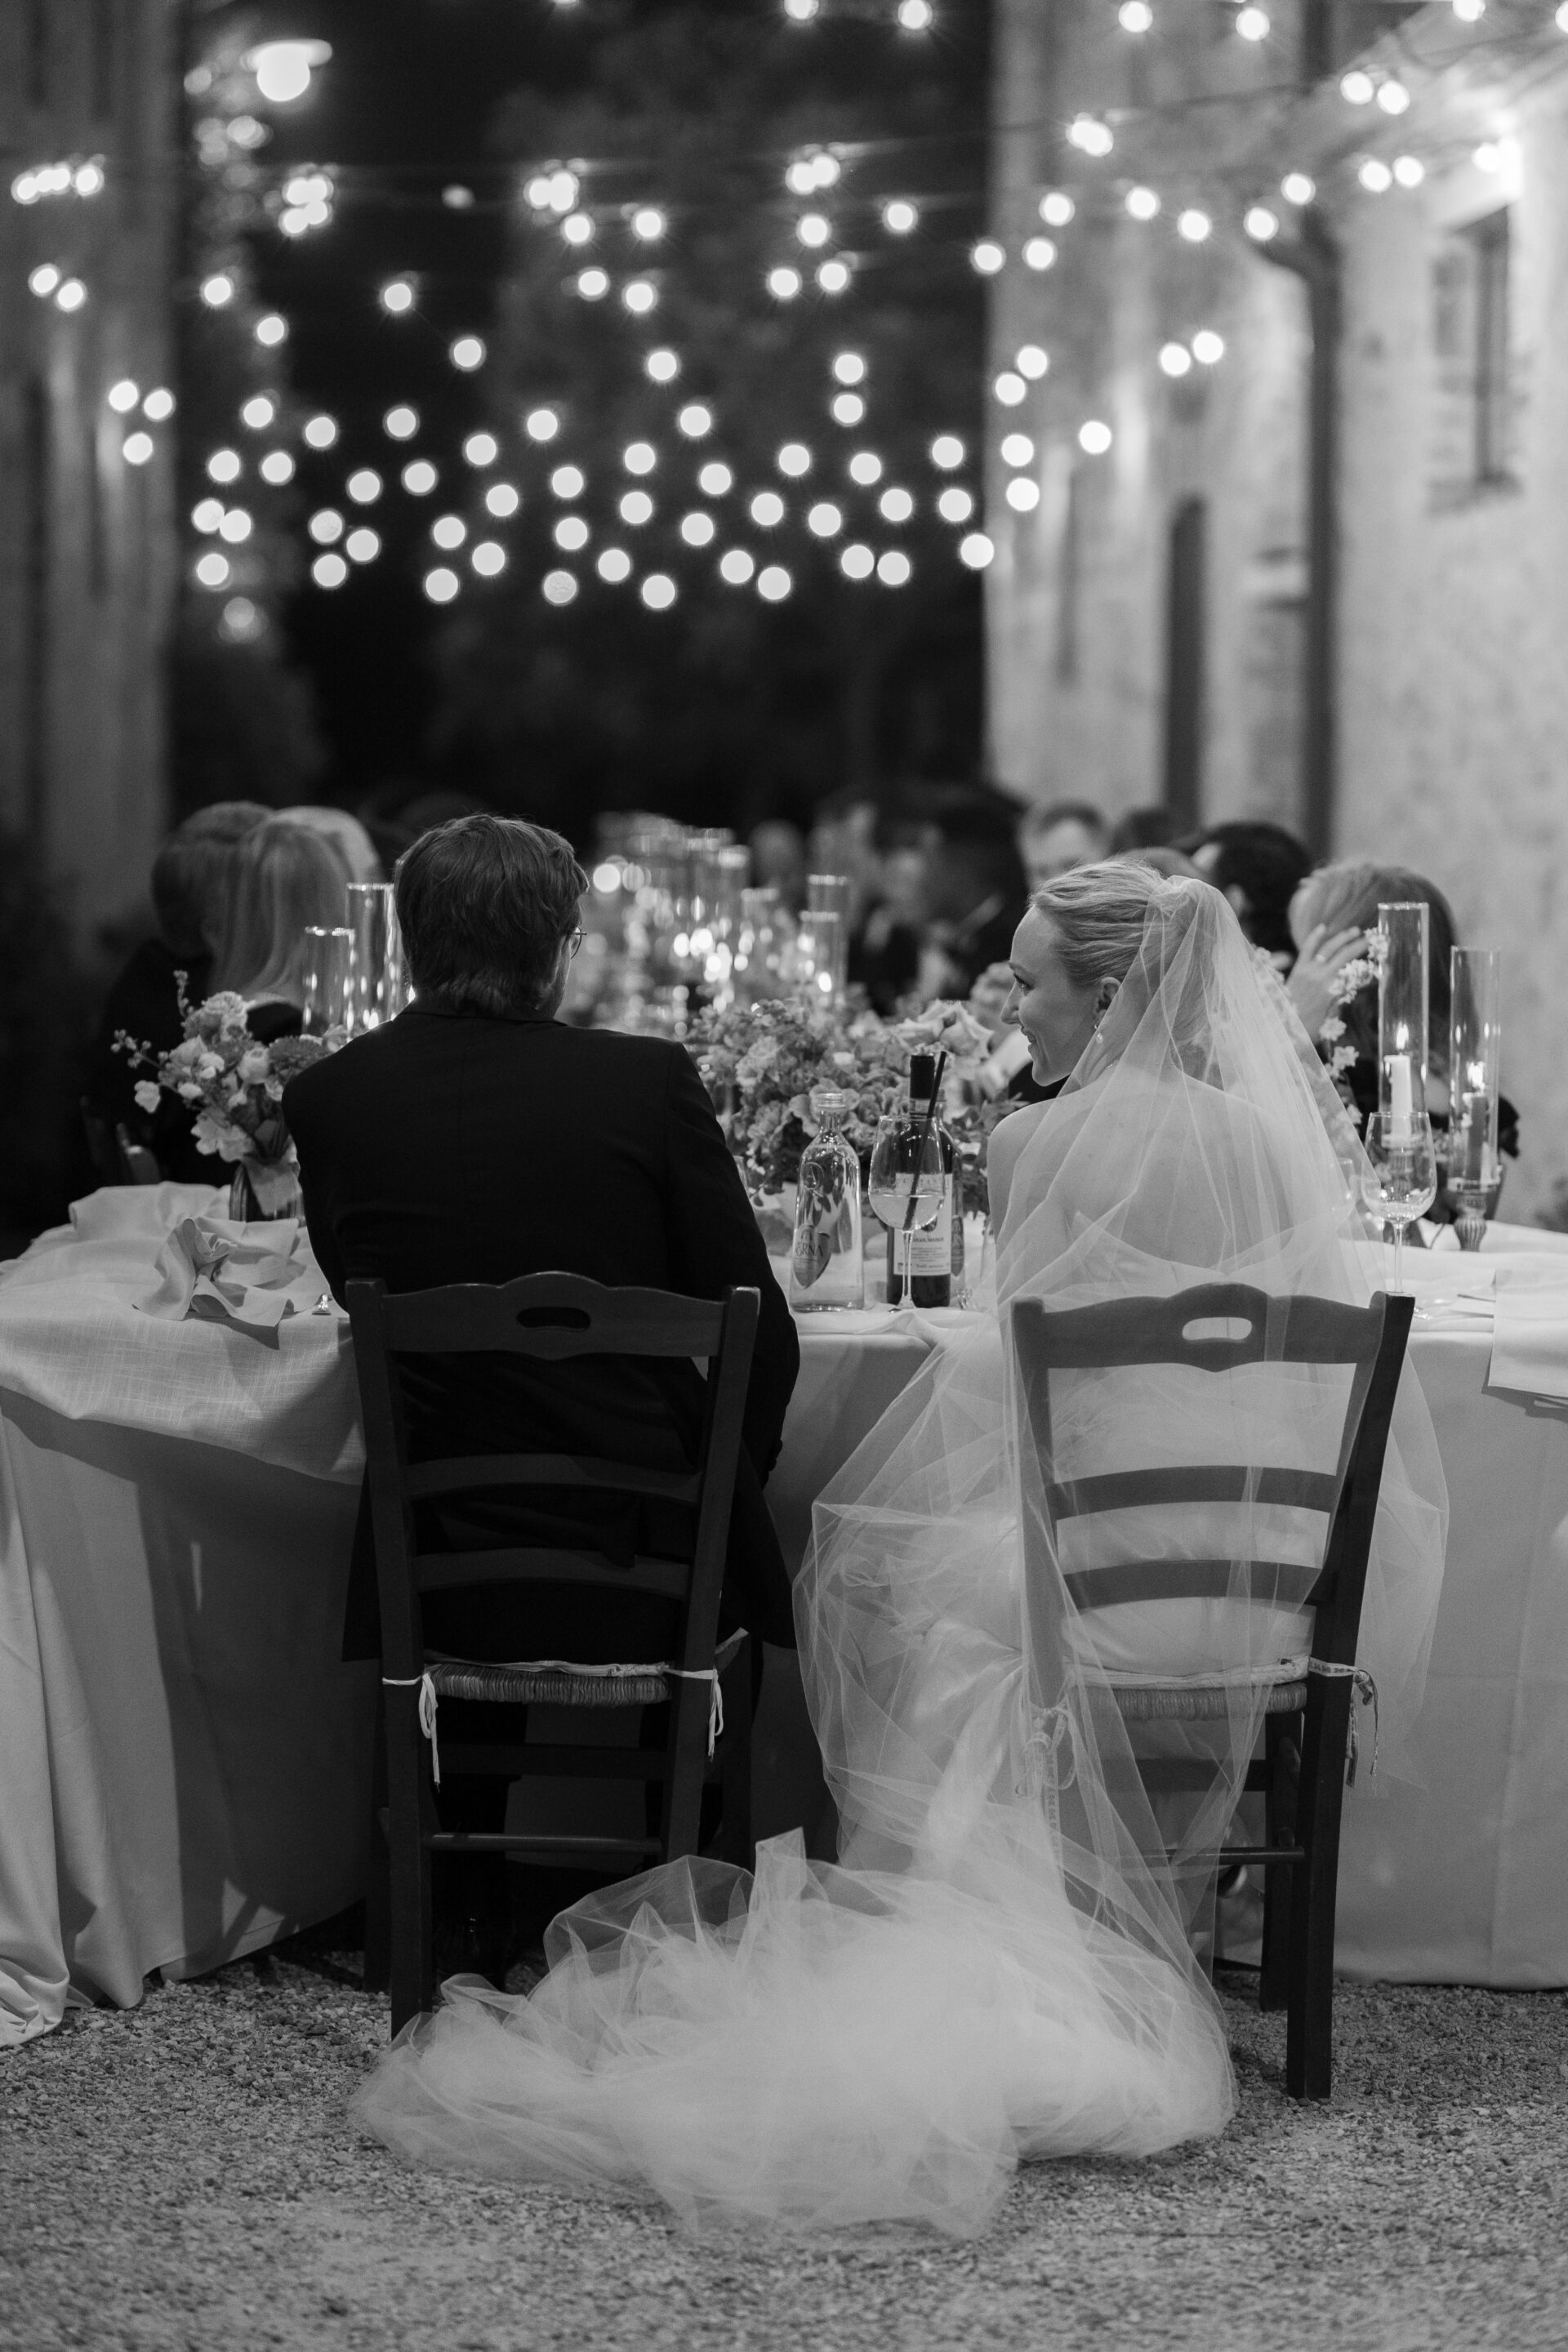 Guests enjoy an Italian wedding feast at luxury Tuscan wedding